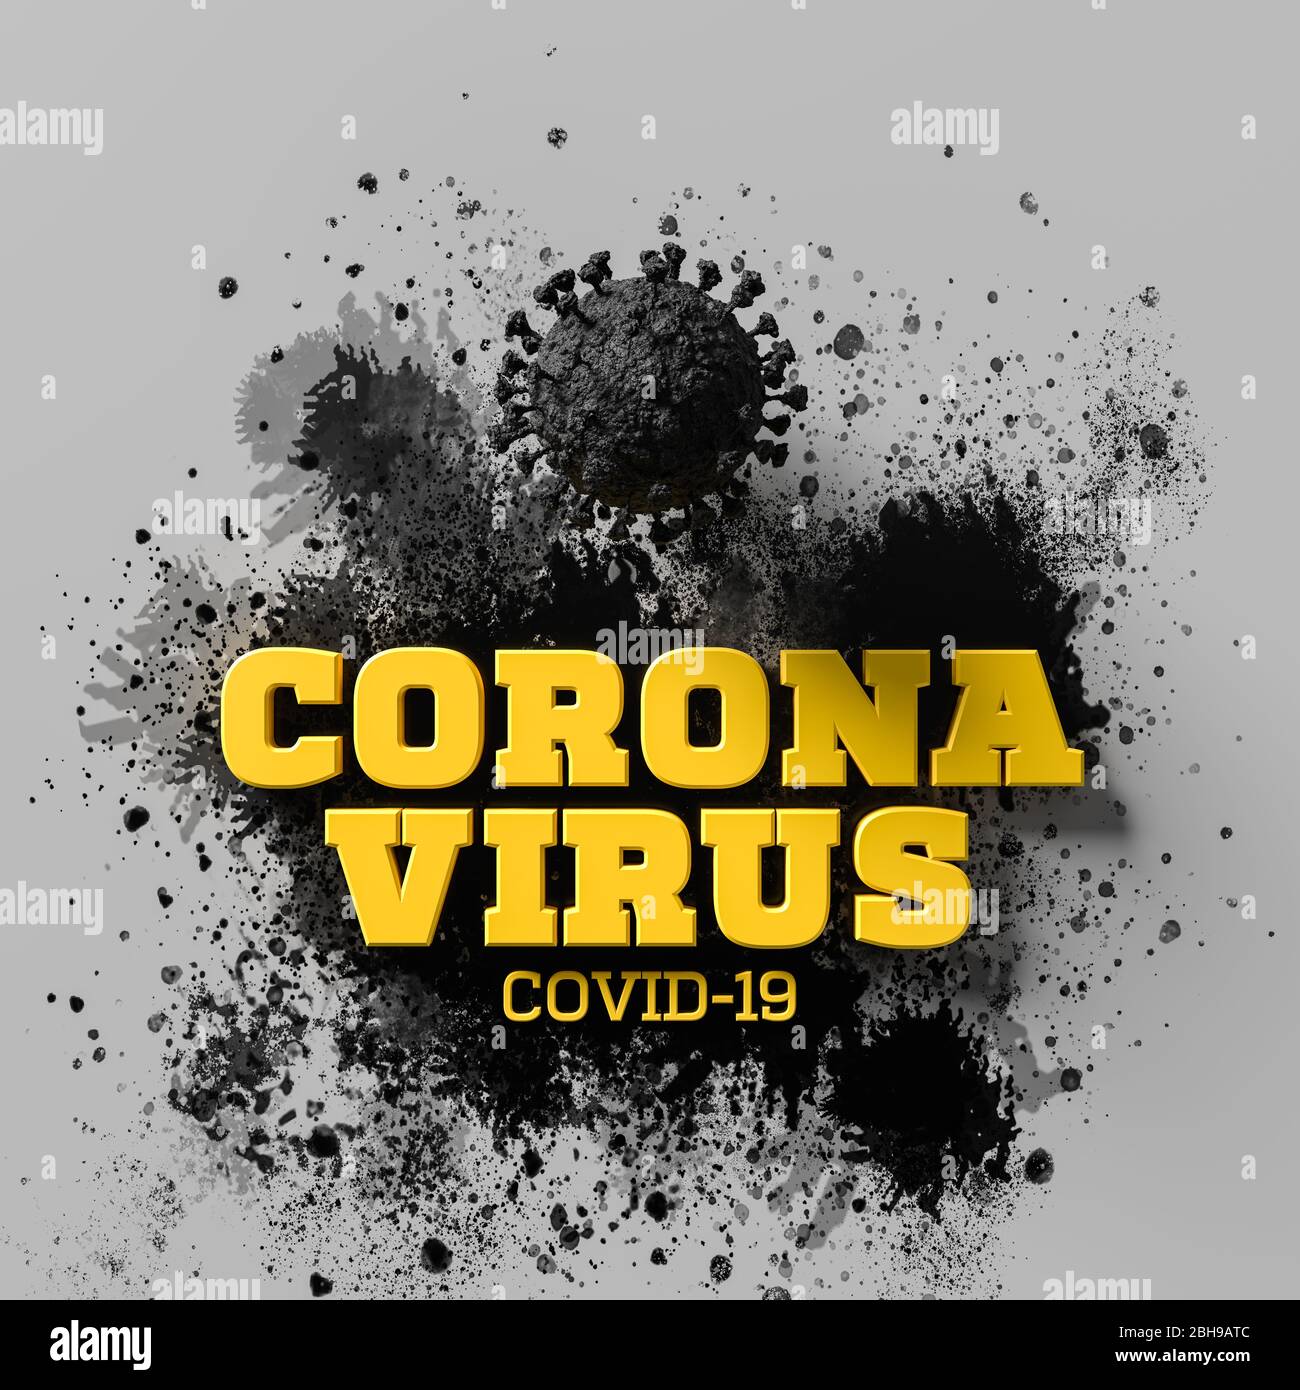 Coronavirus 2019-nCov novel coronavirus outbreak concept background. Microscopic view of floating influenza virus cells. 3D illustration. Stock Photo